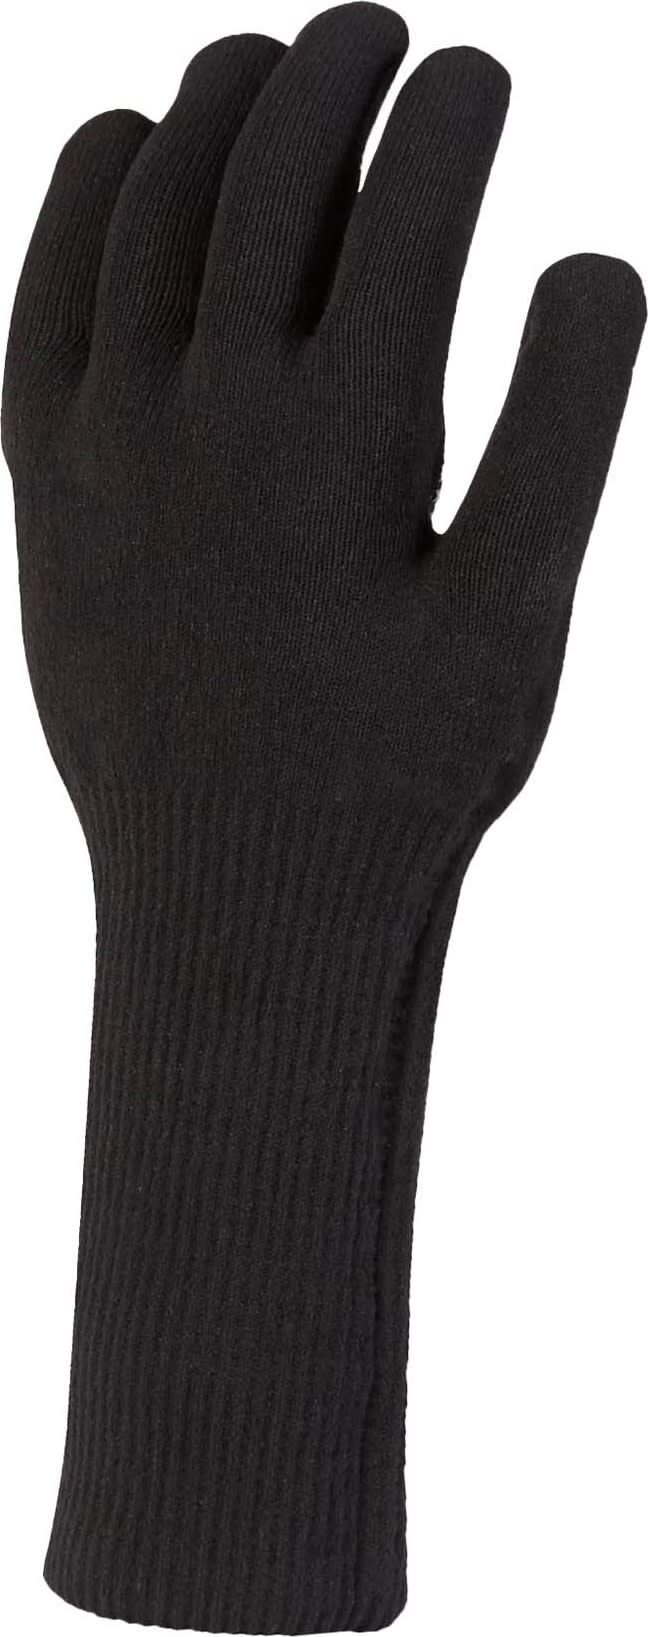 Waterproof All Weather Ultra Grip Knitted Gauntlet Black